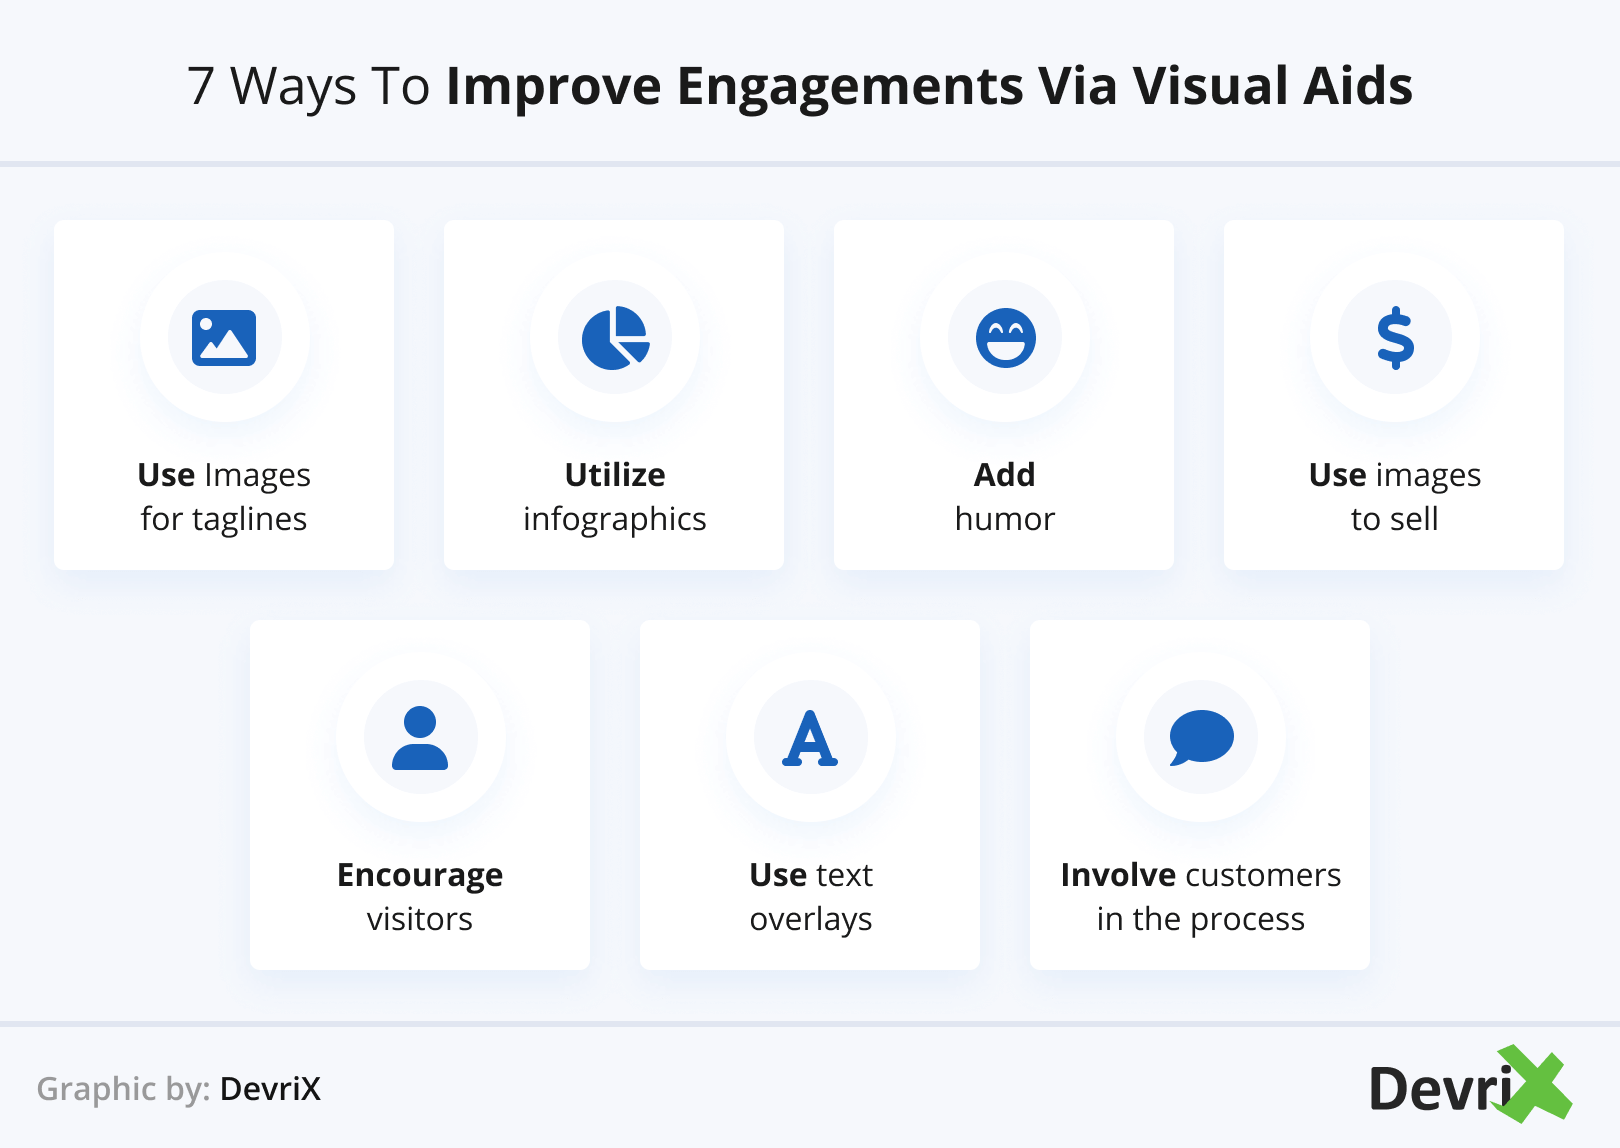 7 Ways to Improve Engagements via Visual Aids